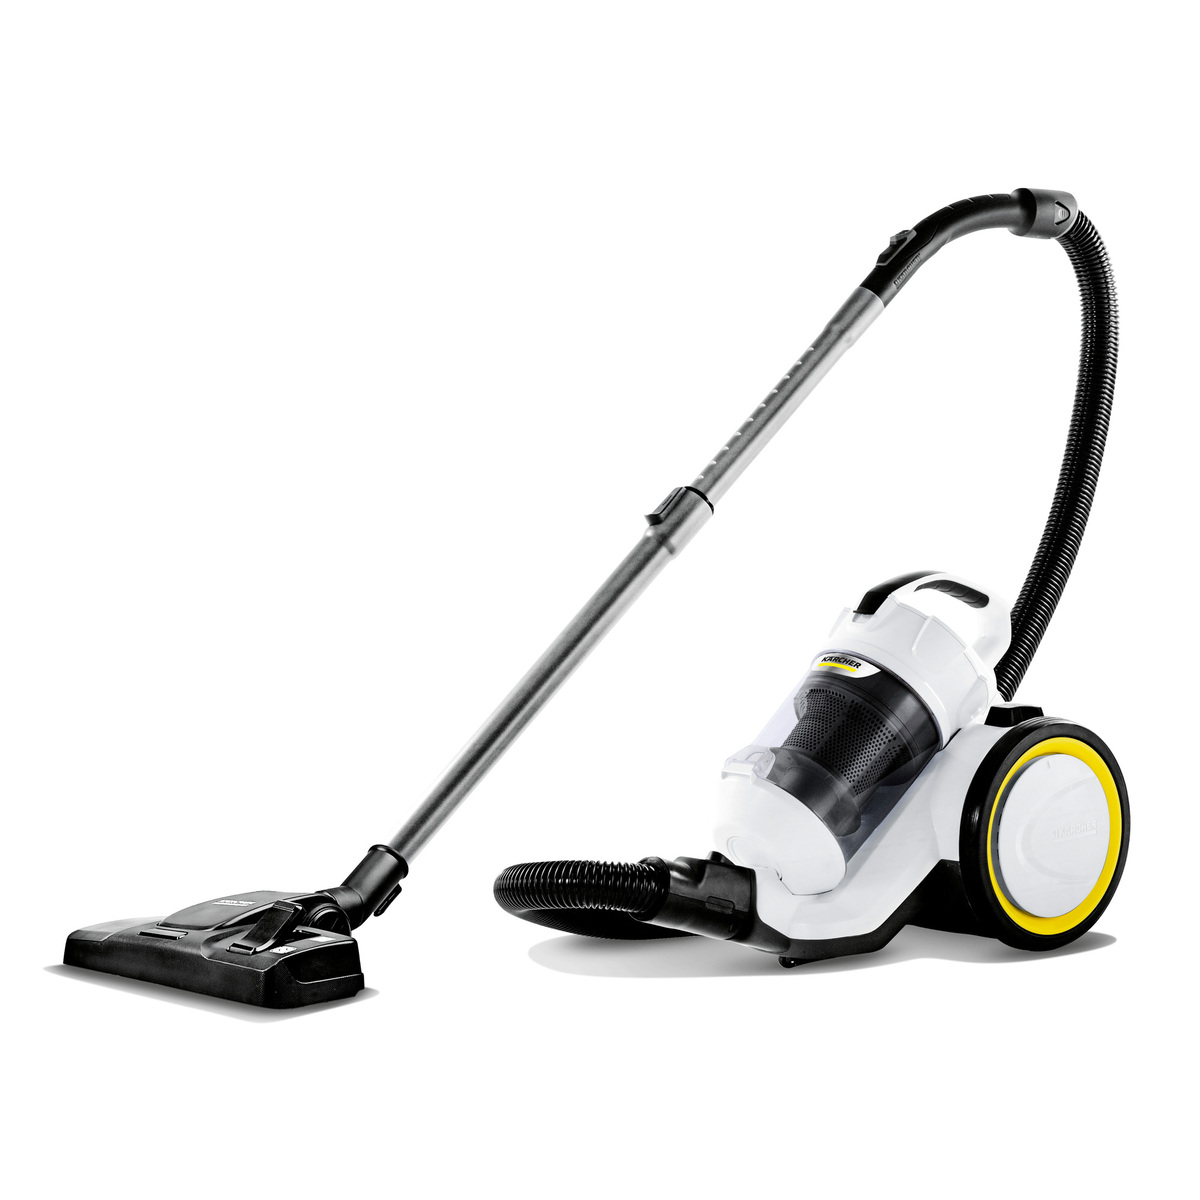 Karcher Bagless Hand Vacuum Cleaner, 0.9 L, 1100 W, Yellow, VC 3 Plus